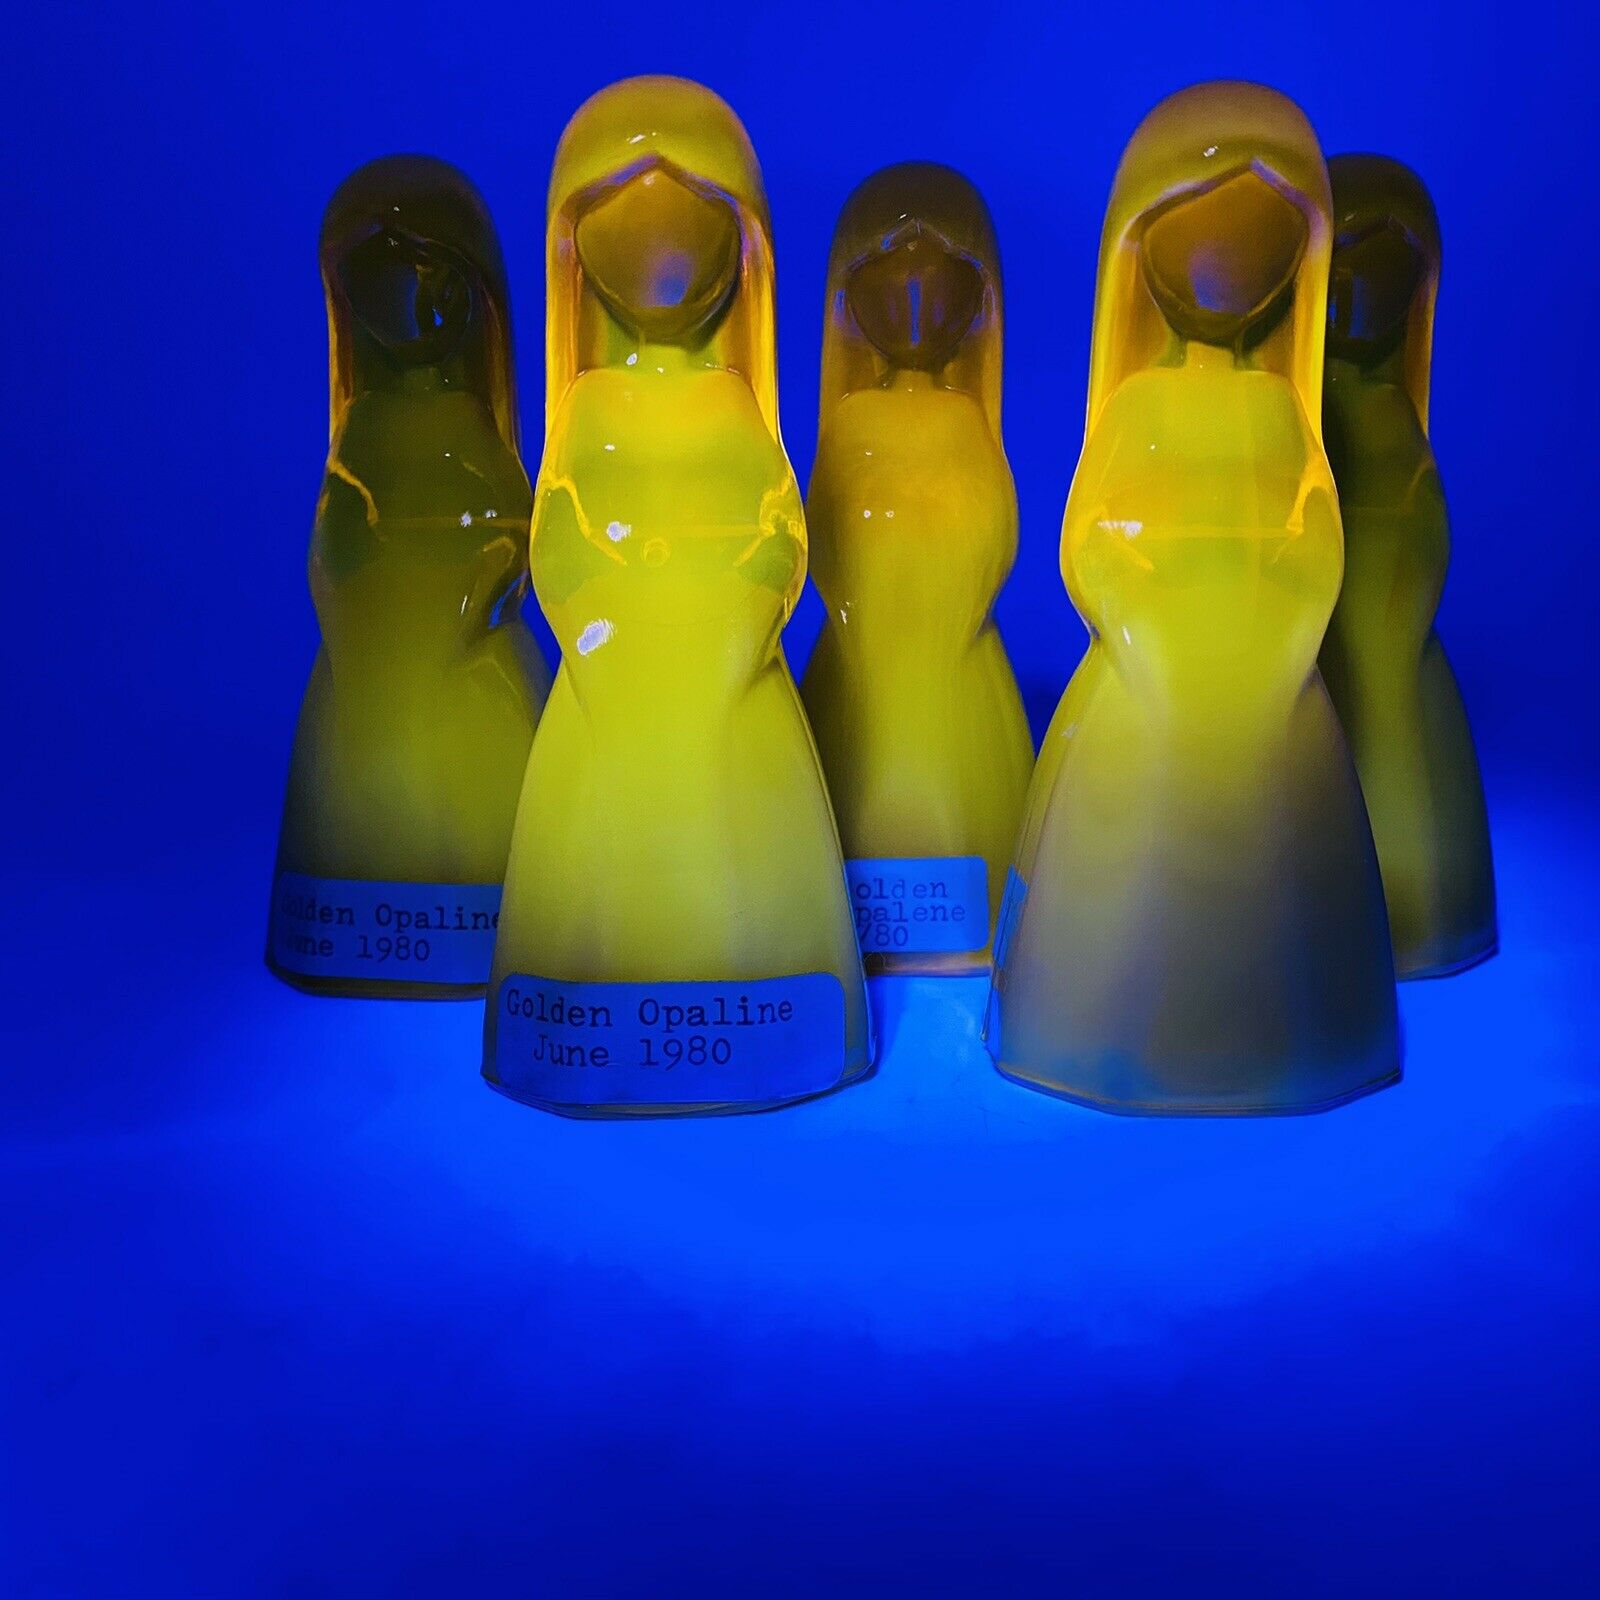 Glowing Group Of 5 Jenny Glass Dolls Mosser Golden Opaline Slag Uranium Uv Glow